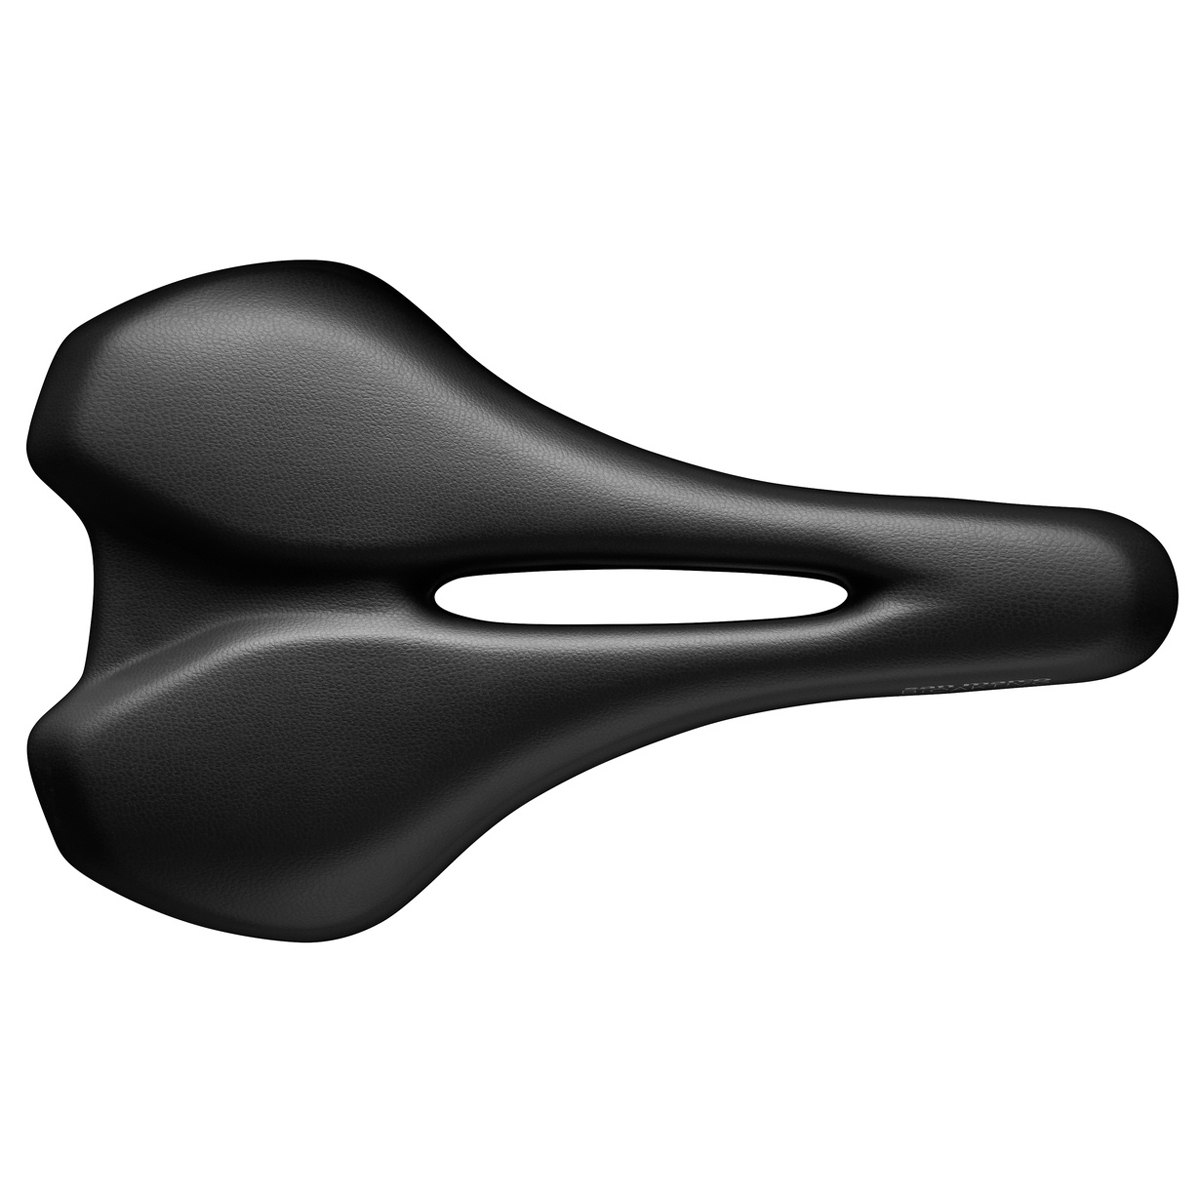 Productfoto van Selle San Marco Sport Open-Fit Saddle - Biofoam S - black